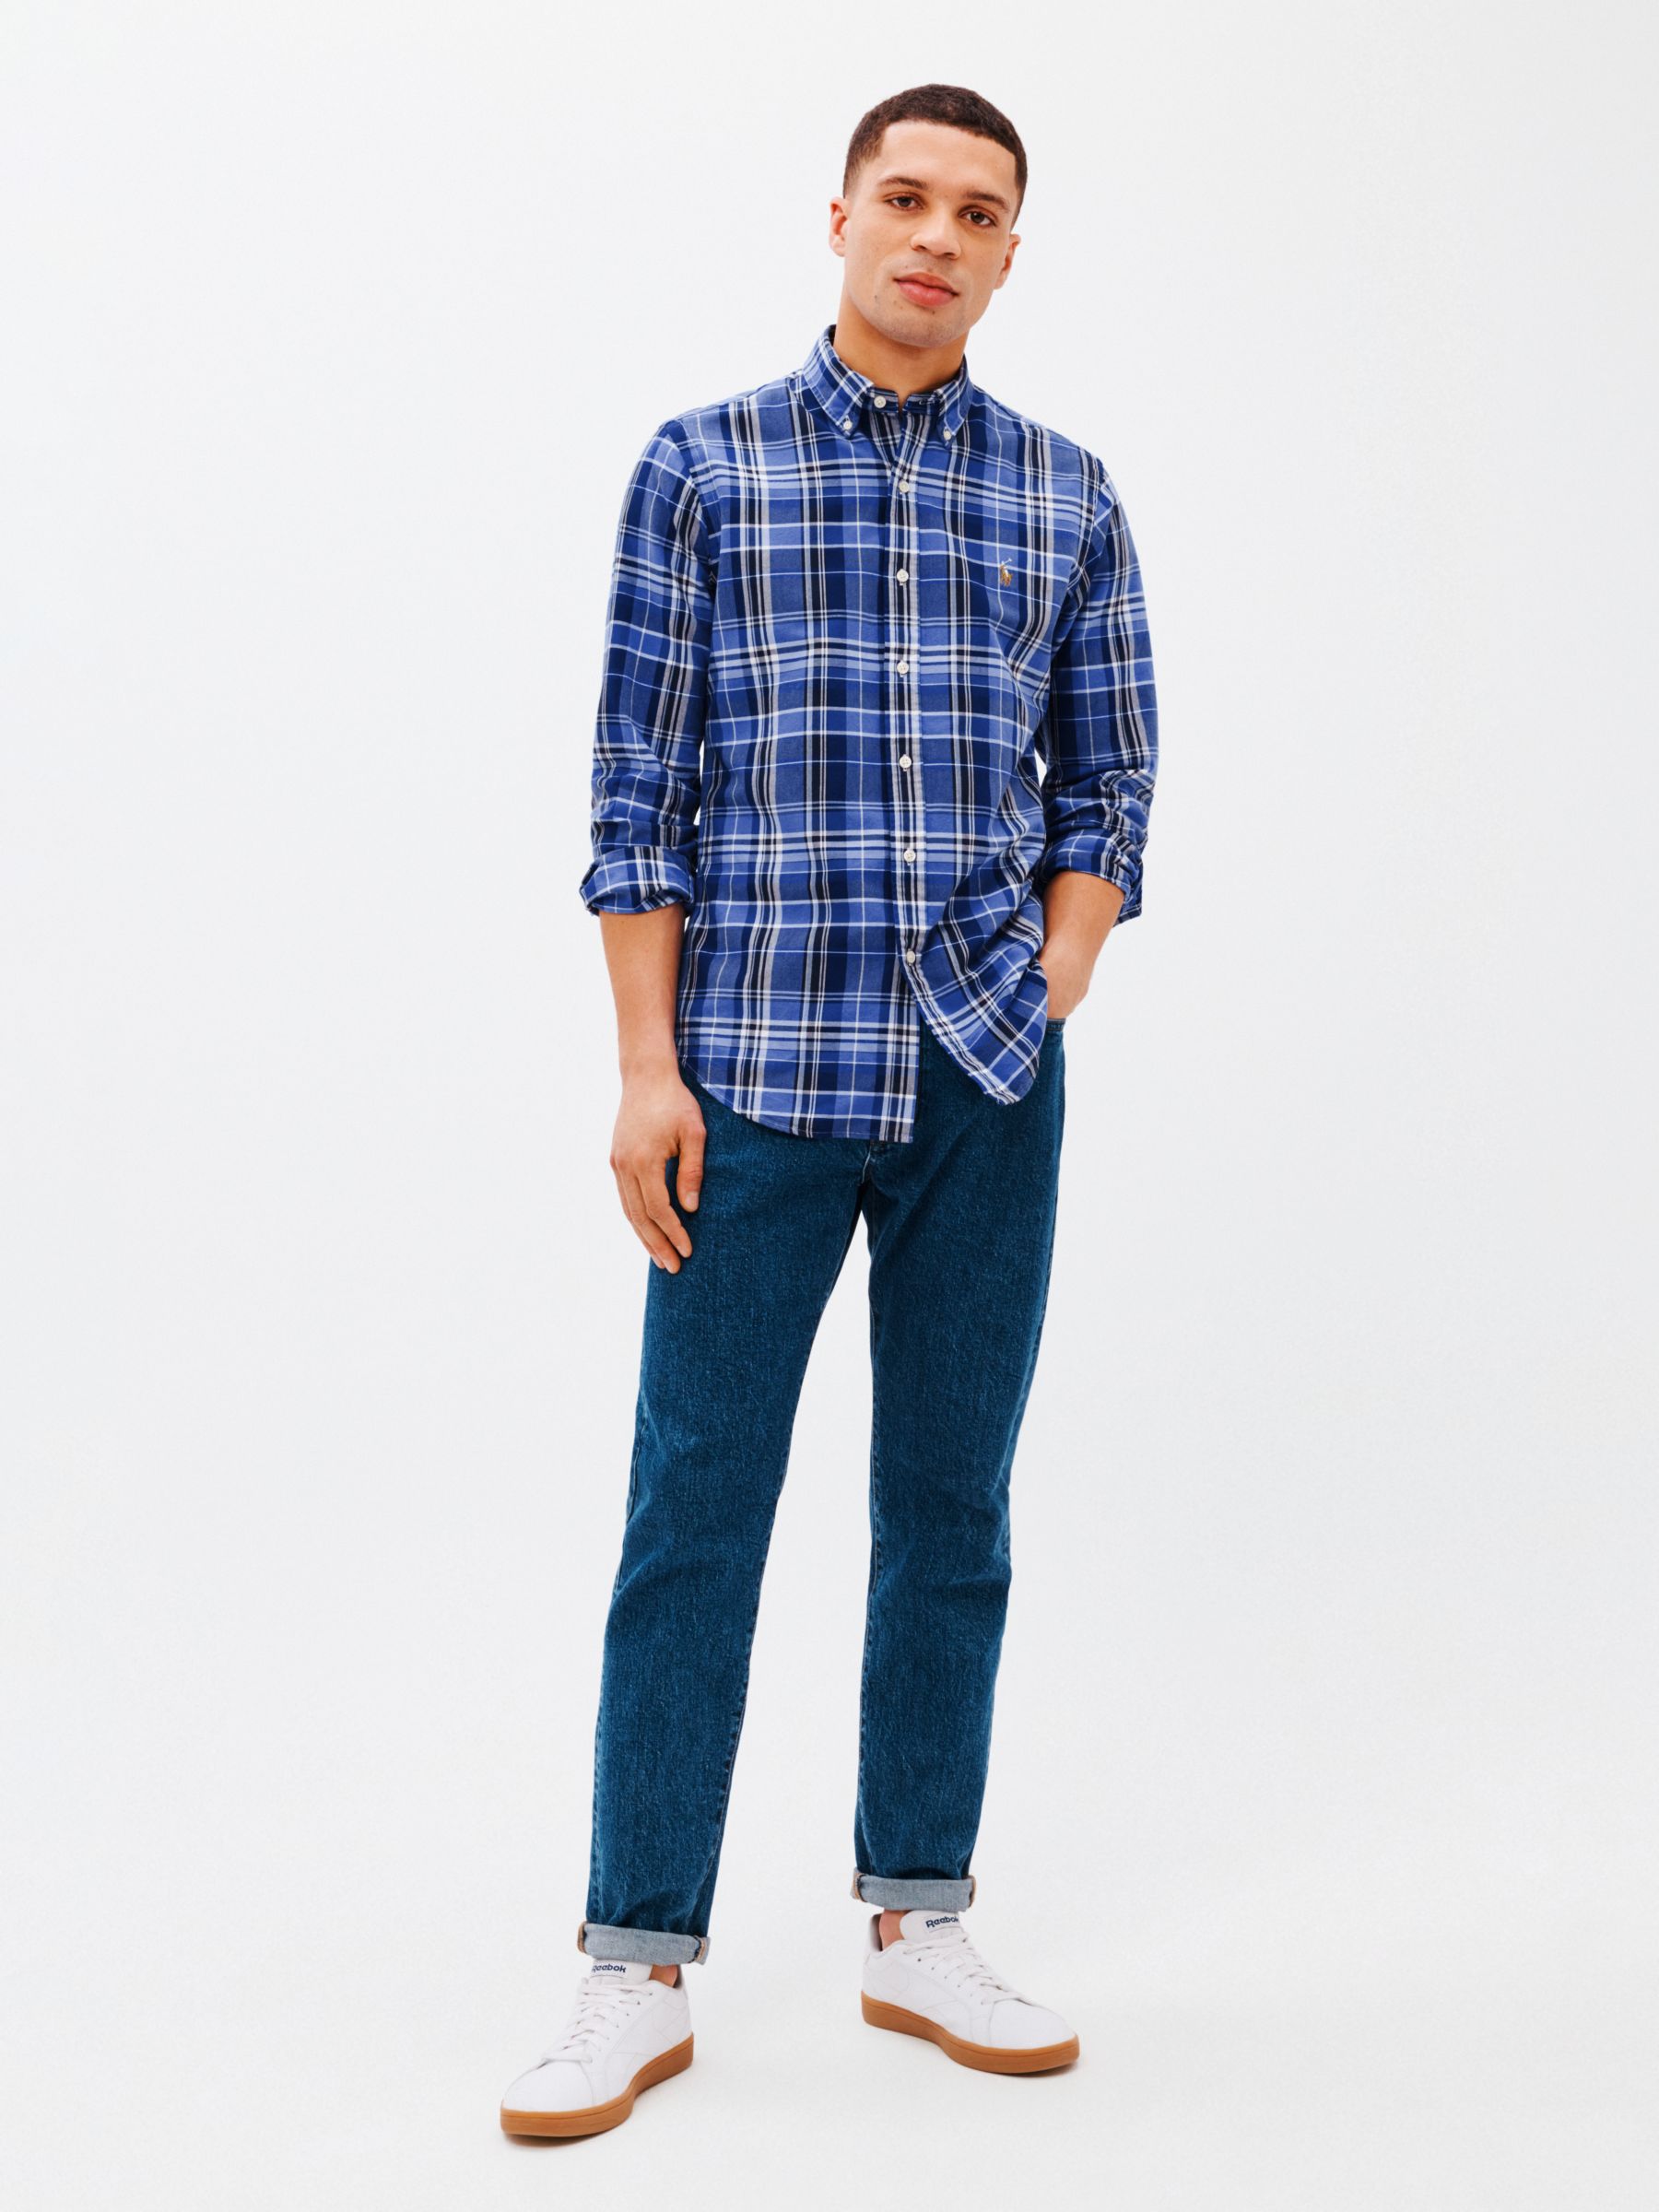 Polo Ralph Lauren Long Sleeve Check Shirt, Blue/Multi, S